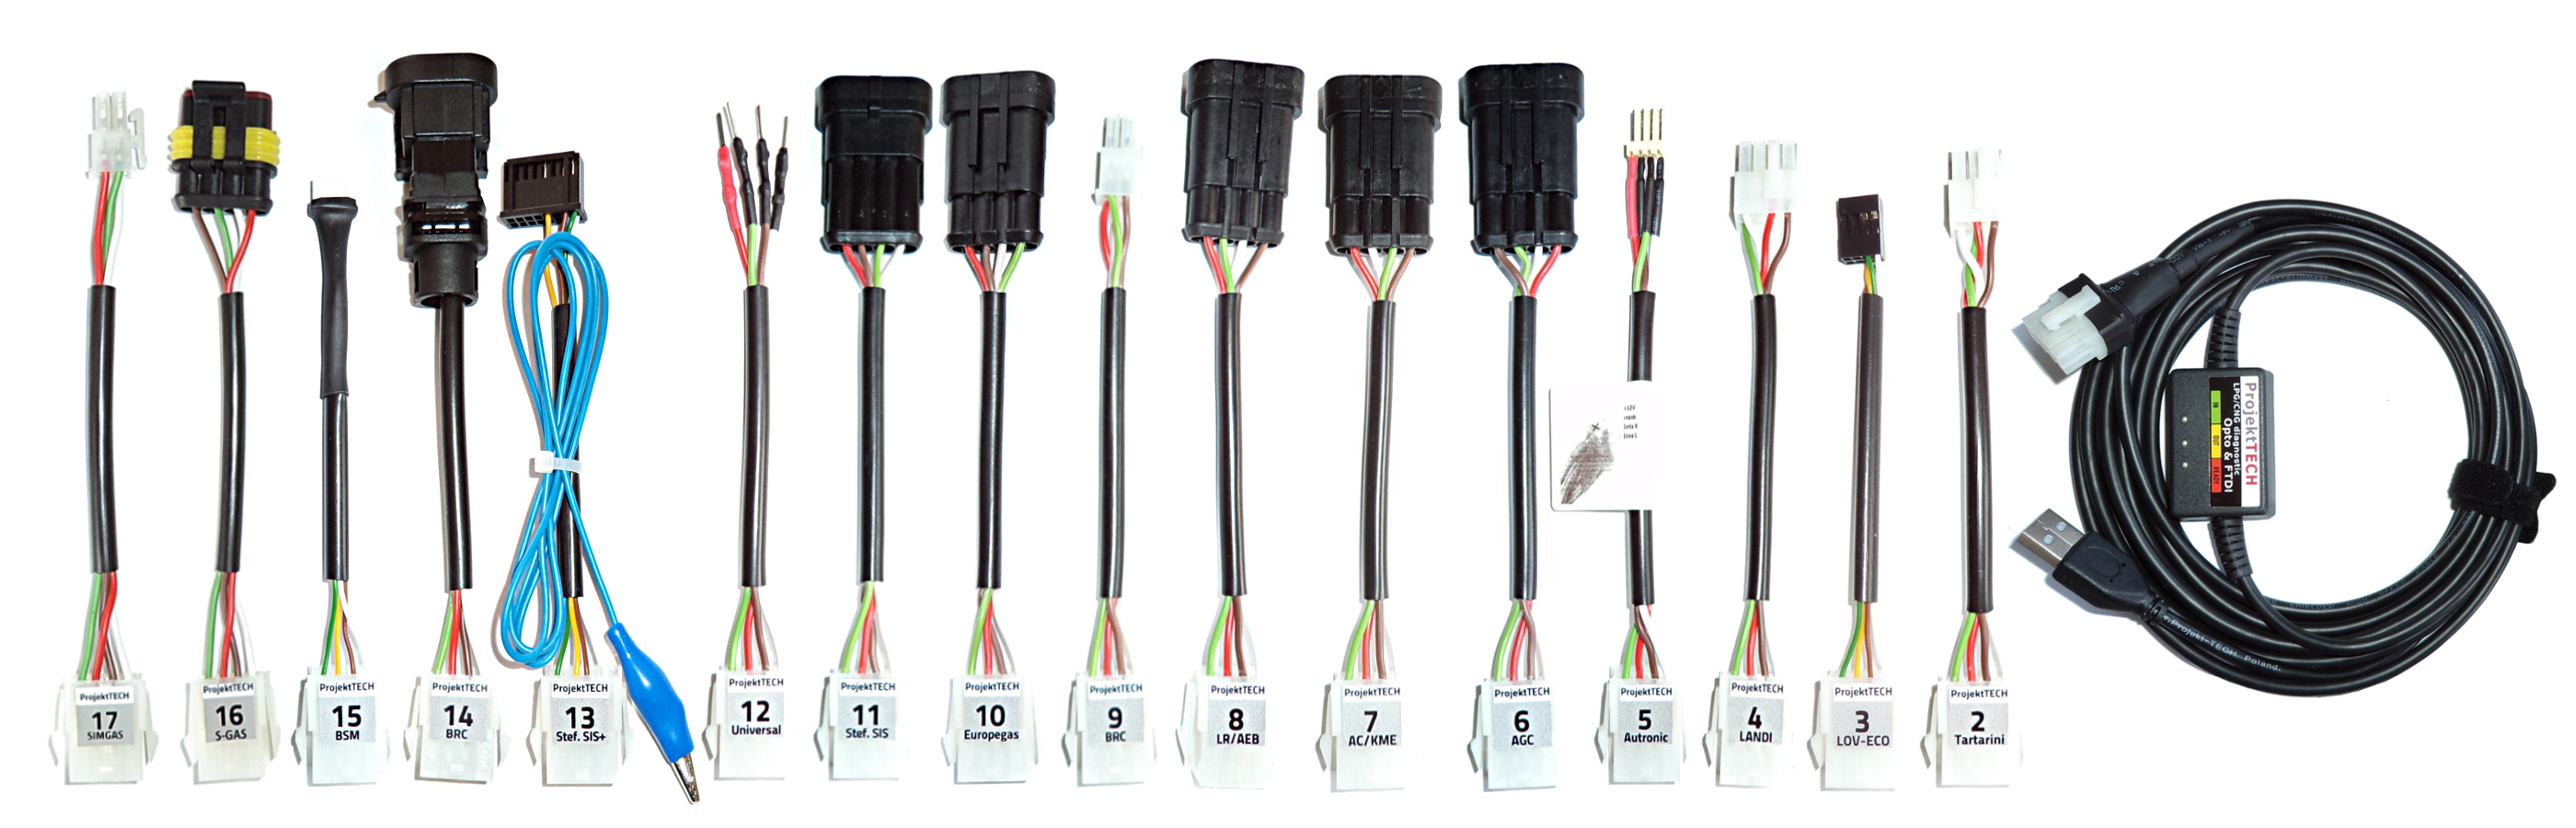 Opto&FTDI set of 17 cables kme, sgas, simgas, tartarini, autronic, bardolini, just heavy, stag, europegas, universal, lovato, omegas, zenit,stefanelli, sis, lov-eco, les98, brc,just junior